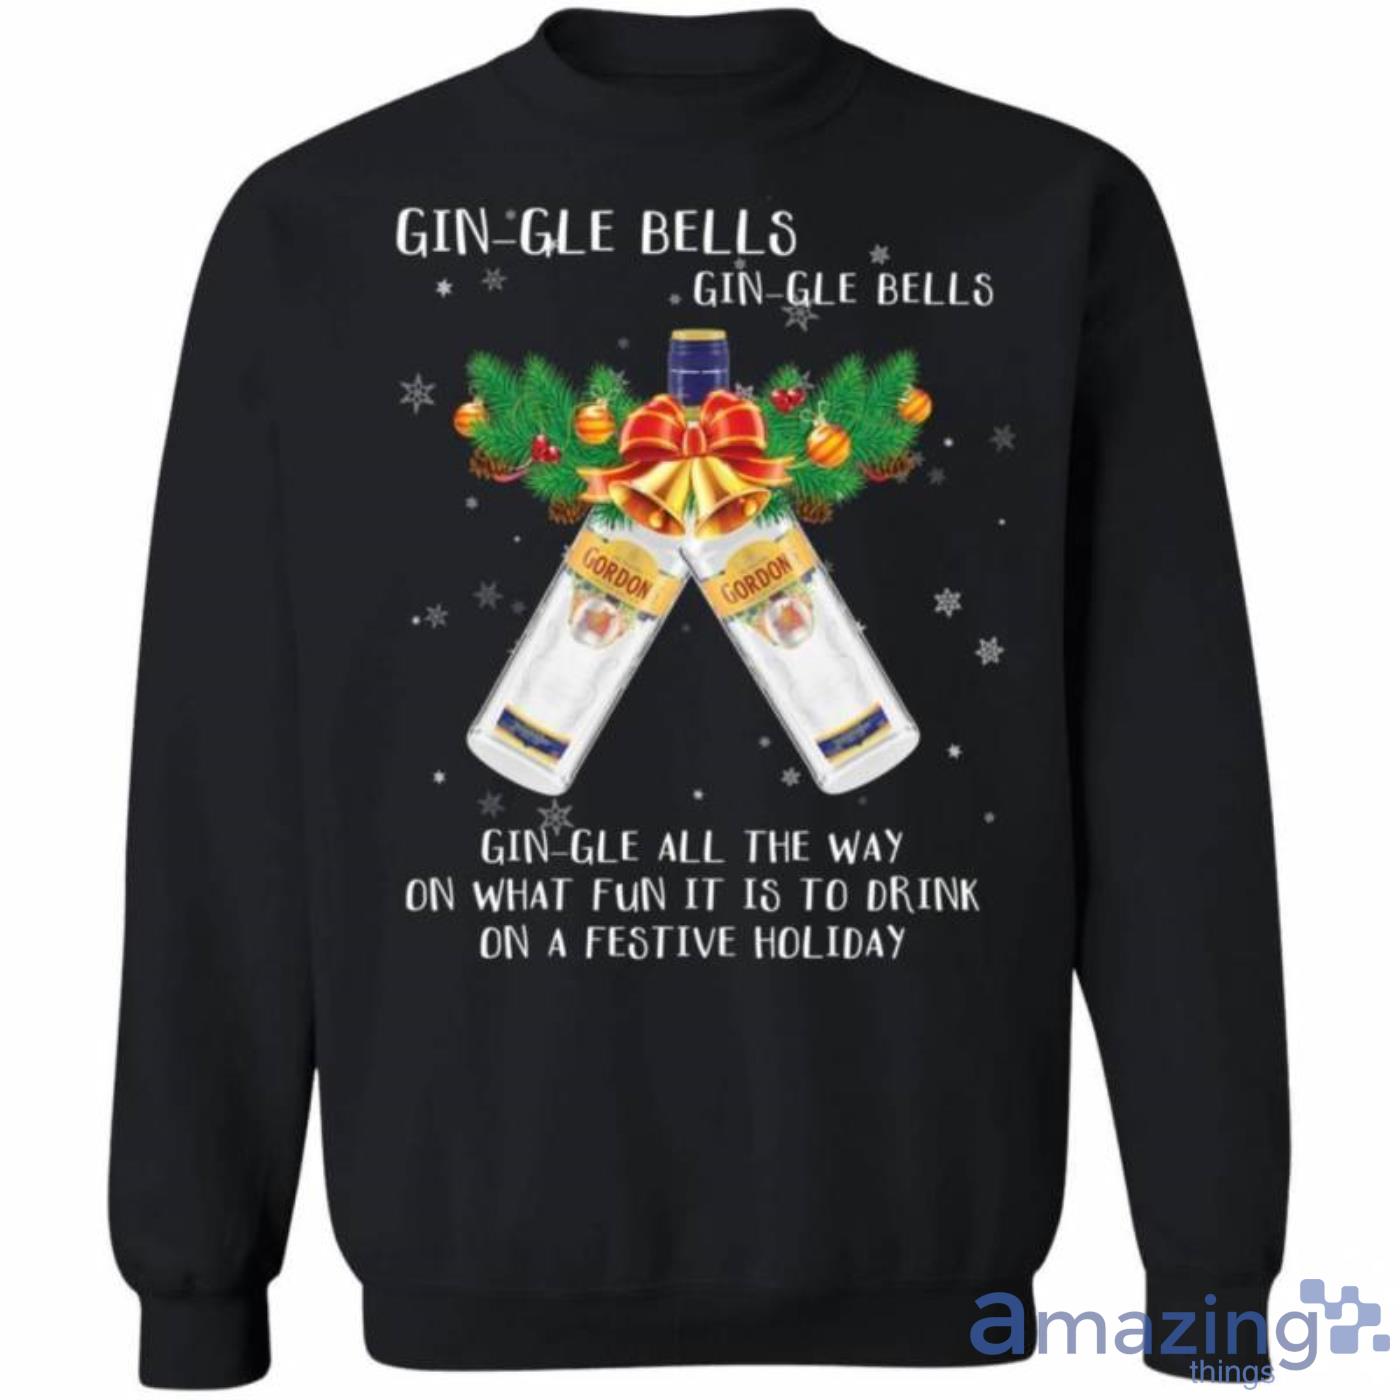 Christmas Sweater Gin-gle Bells Gordon Xmas Gin Bells Sweatshirt Best Gift For Xmas Product Photo 1